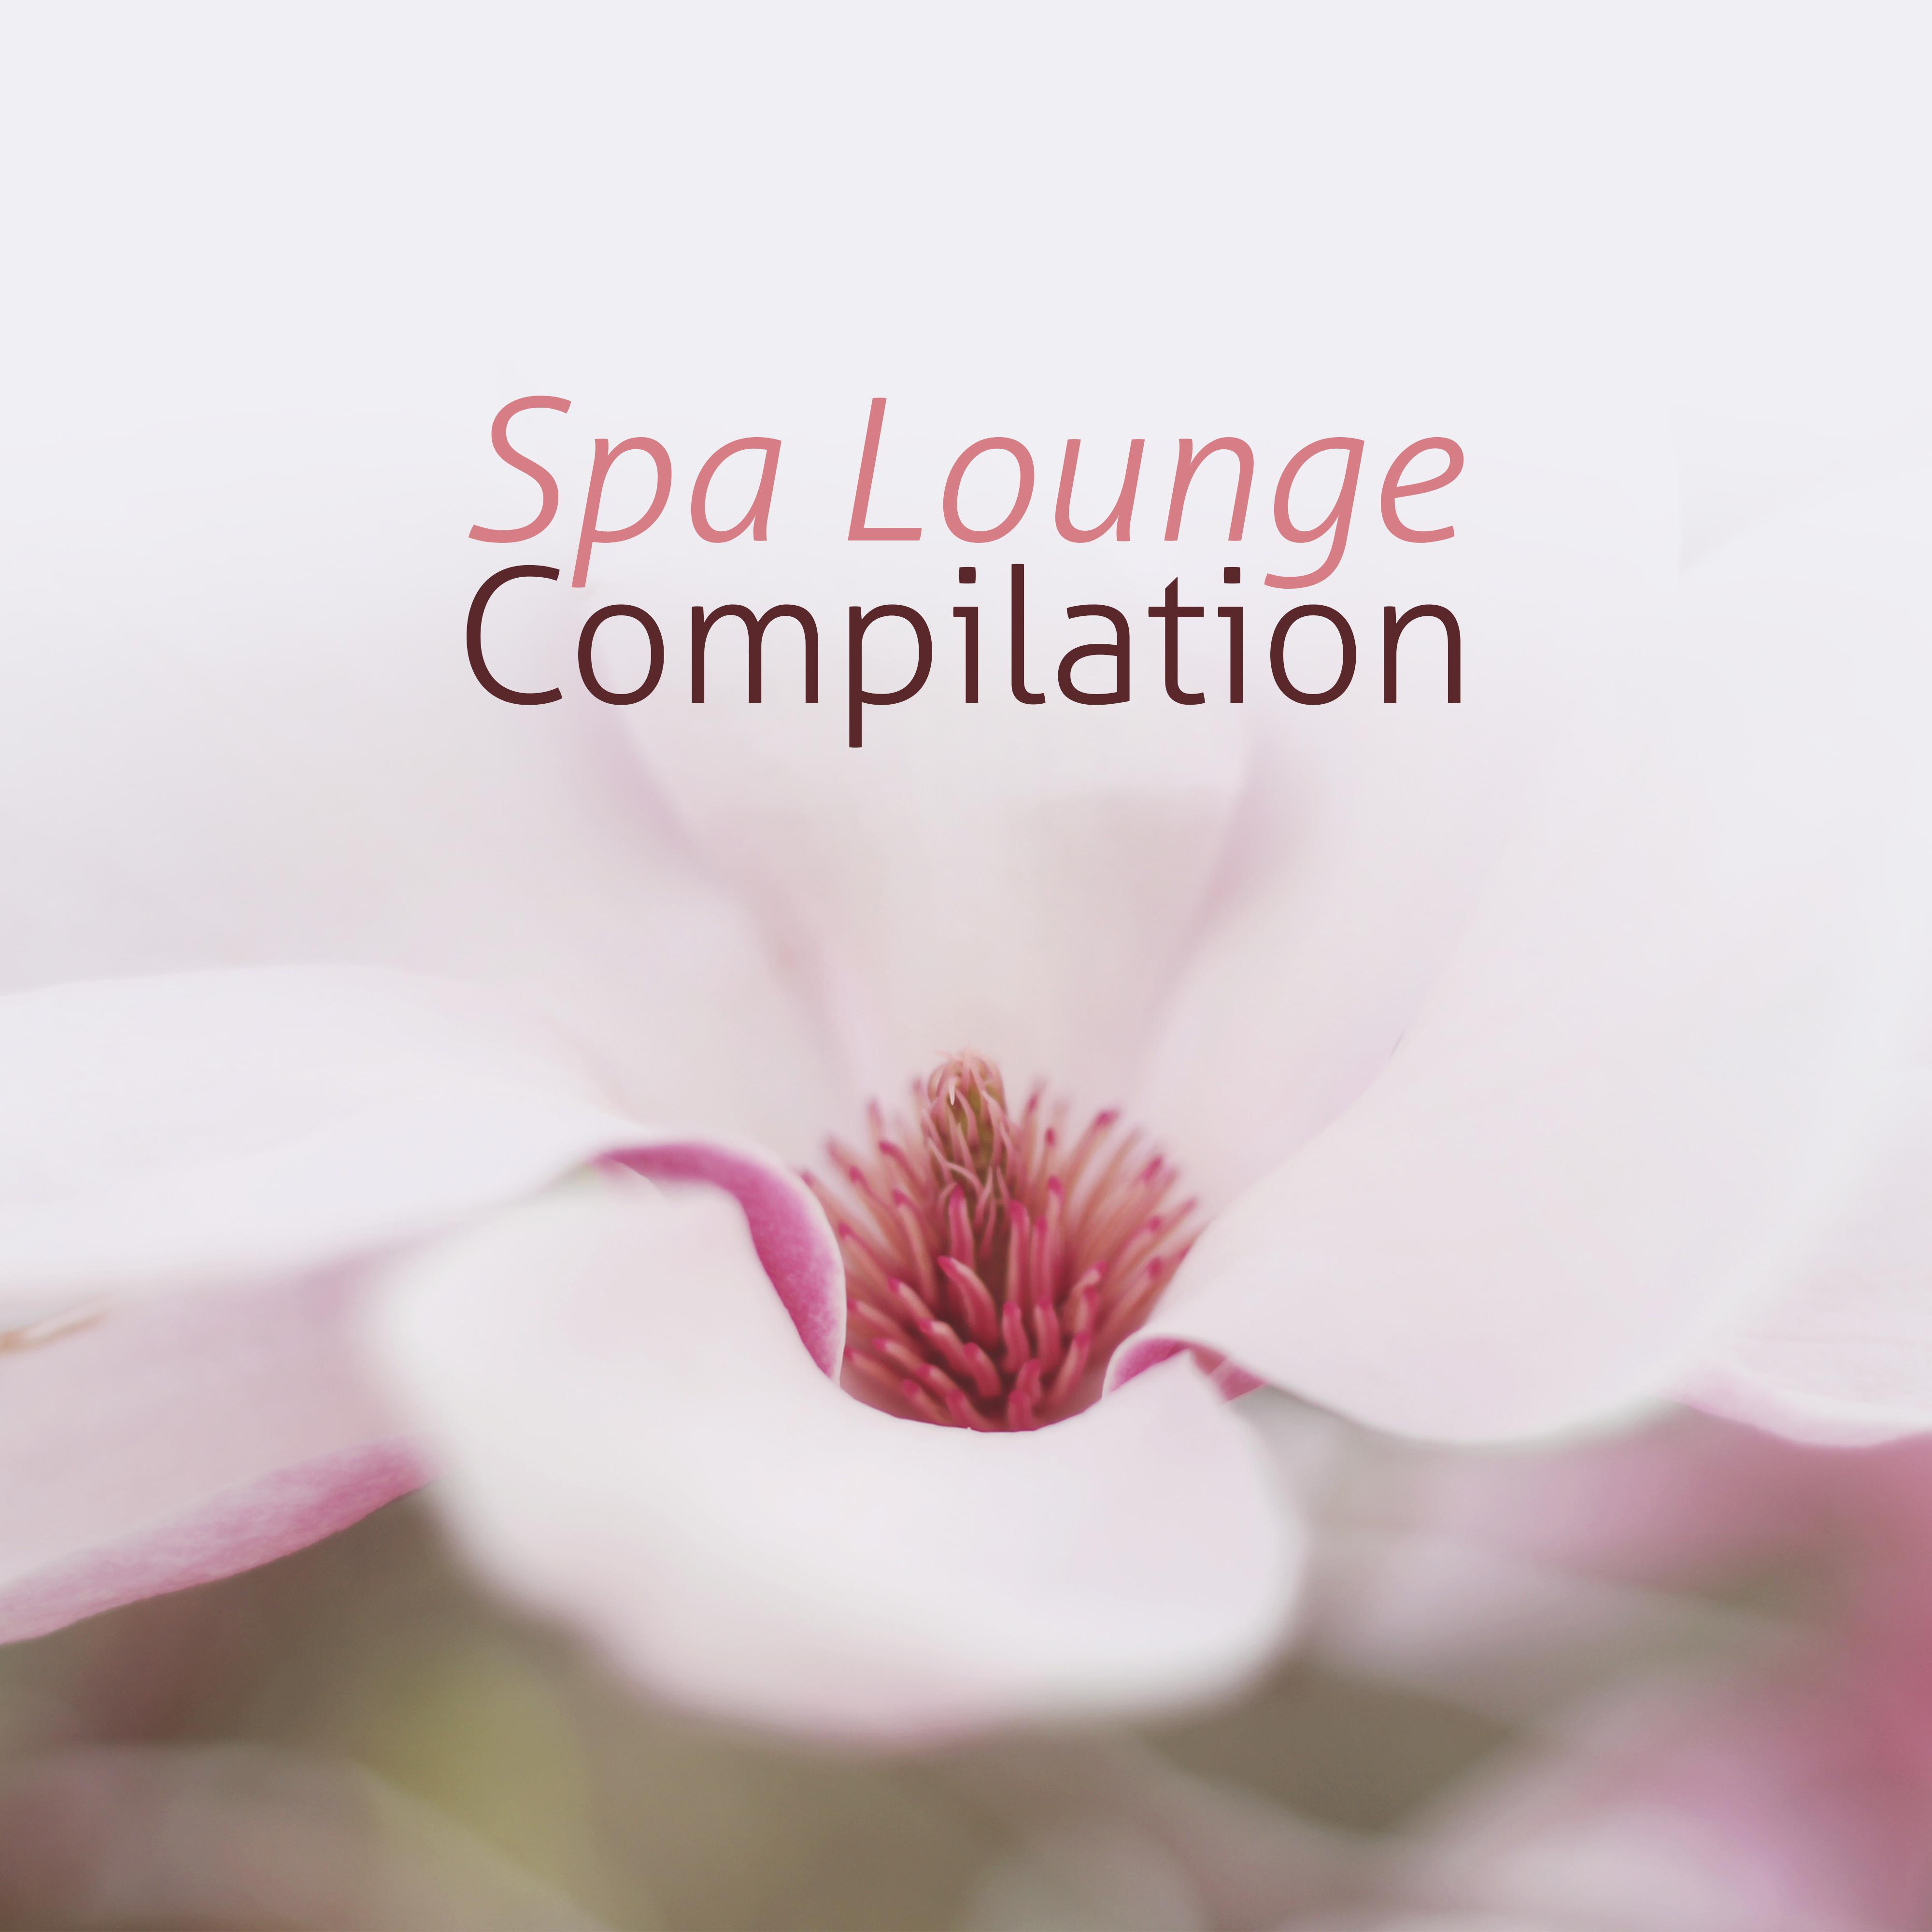 Spa Lounge Compilation